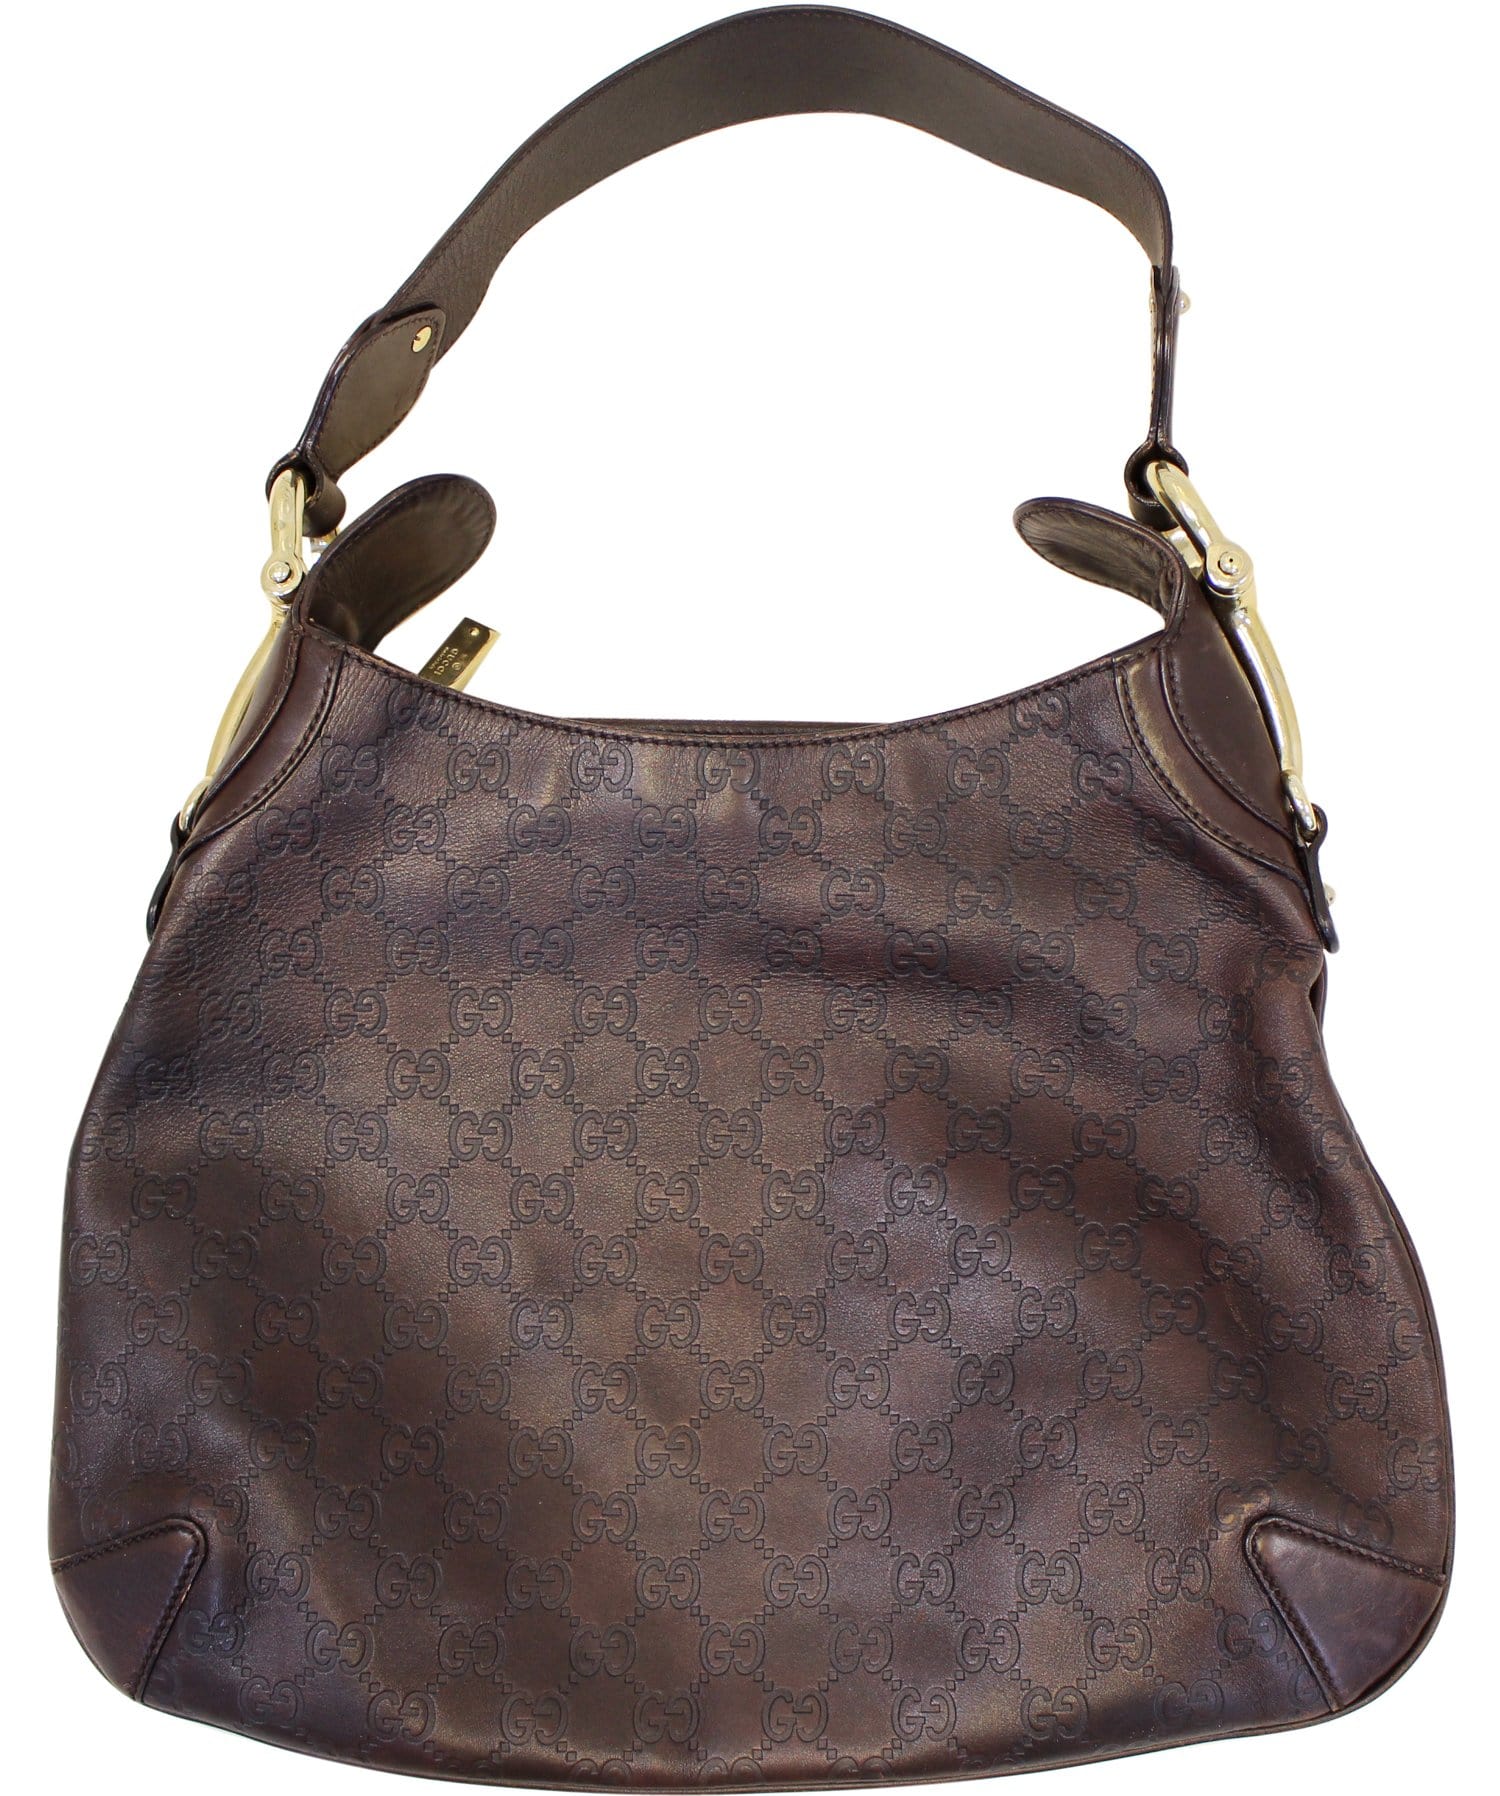 Authentic Gucci Guccissima Leather Medium Hobo Shoulder Bag Originally  $2,100